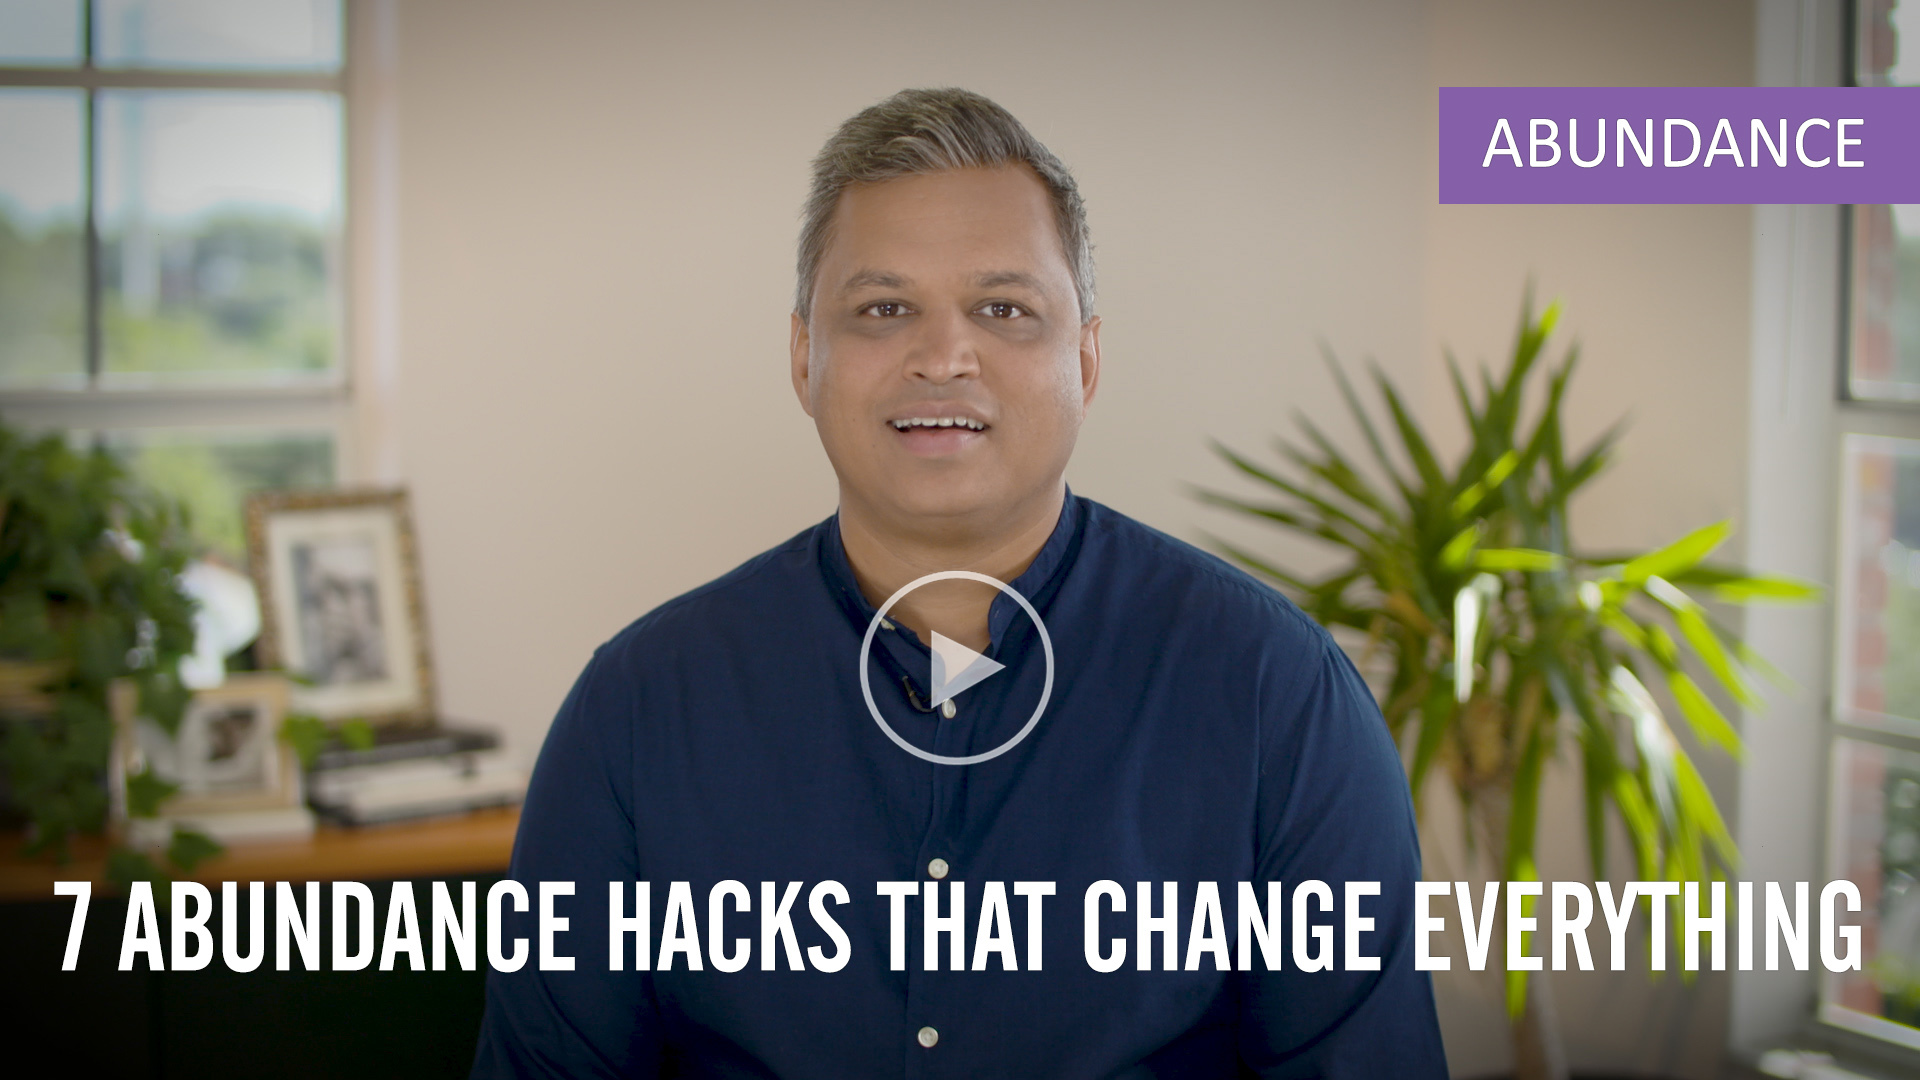 7 Abundance Hacks That Change Everything - YouTube Video